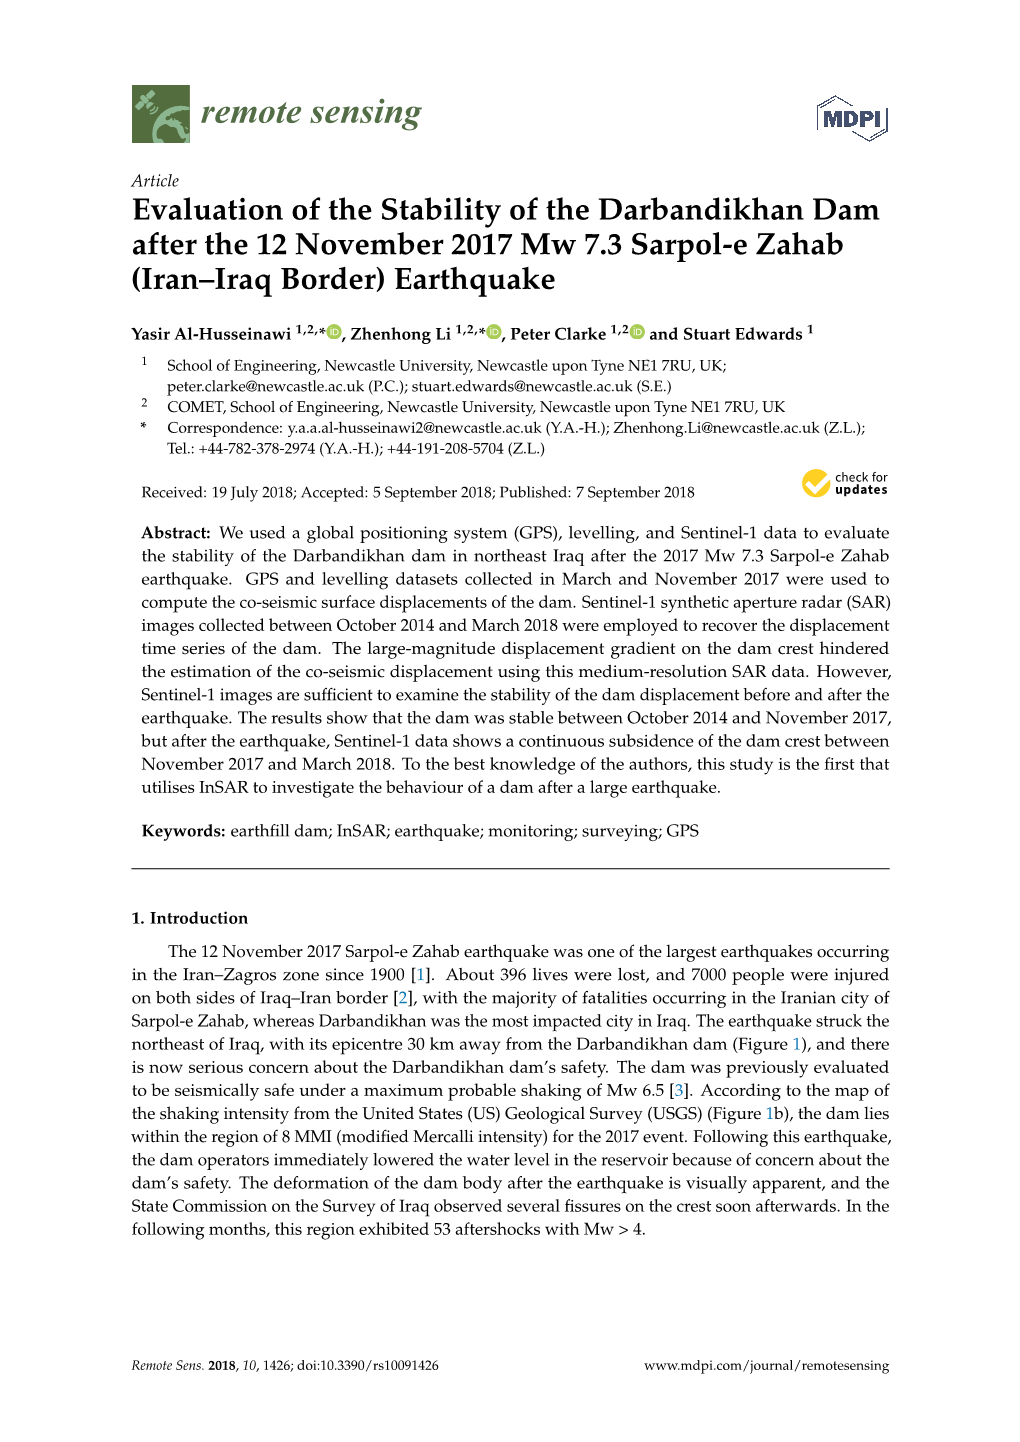 Evaluation of the Stability of the Darbandikhan Dam After the 12 November 2017 Mw 7.3 Sarpol-E Zahab (Iran–Iraq Border) Earthquake